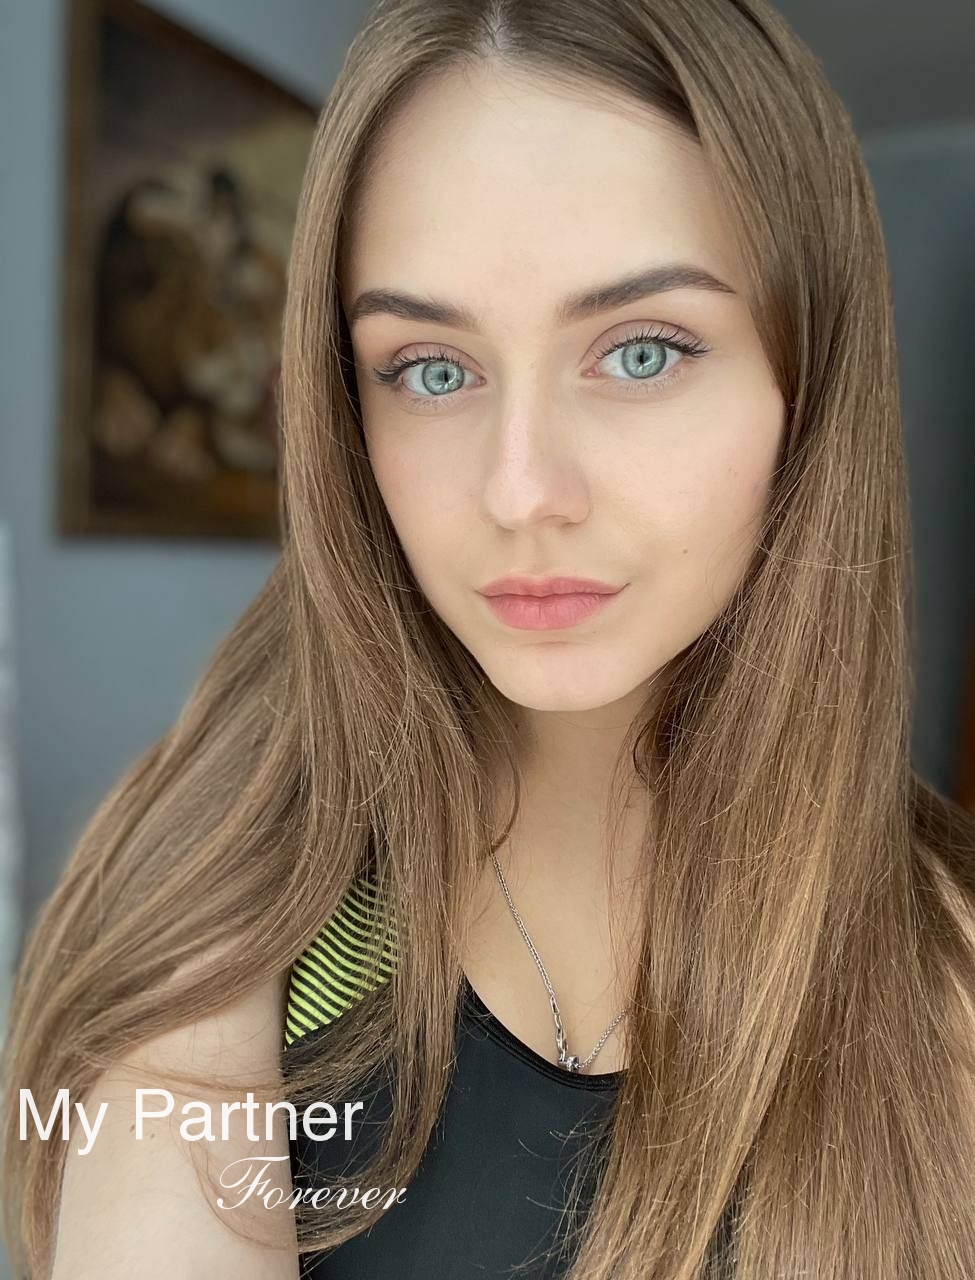 Dating Service to Meet Sexy Ukrainian Lady Irina from Vinnitsa, Ukraine